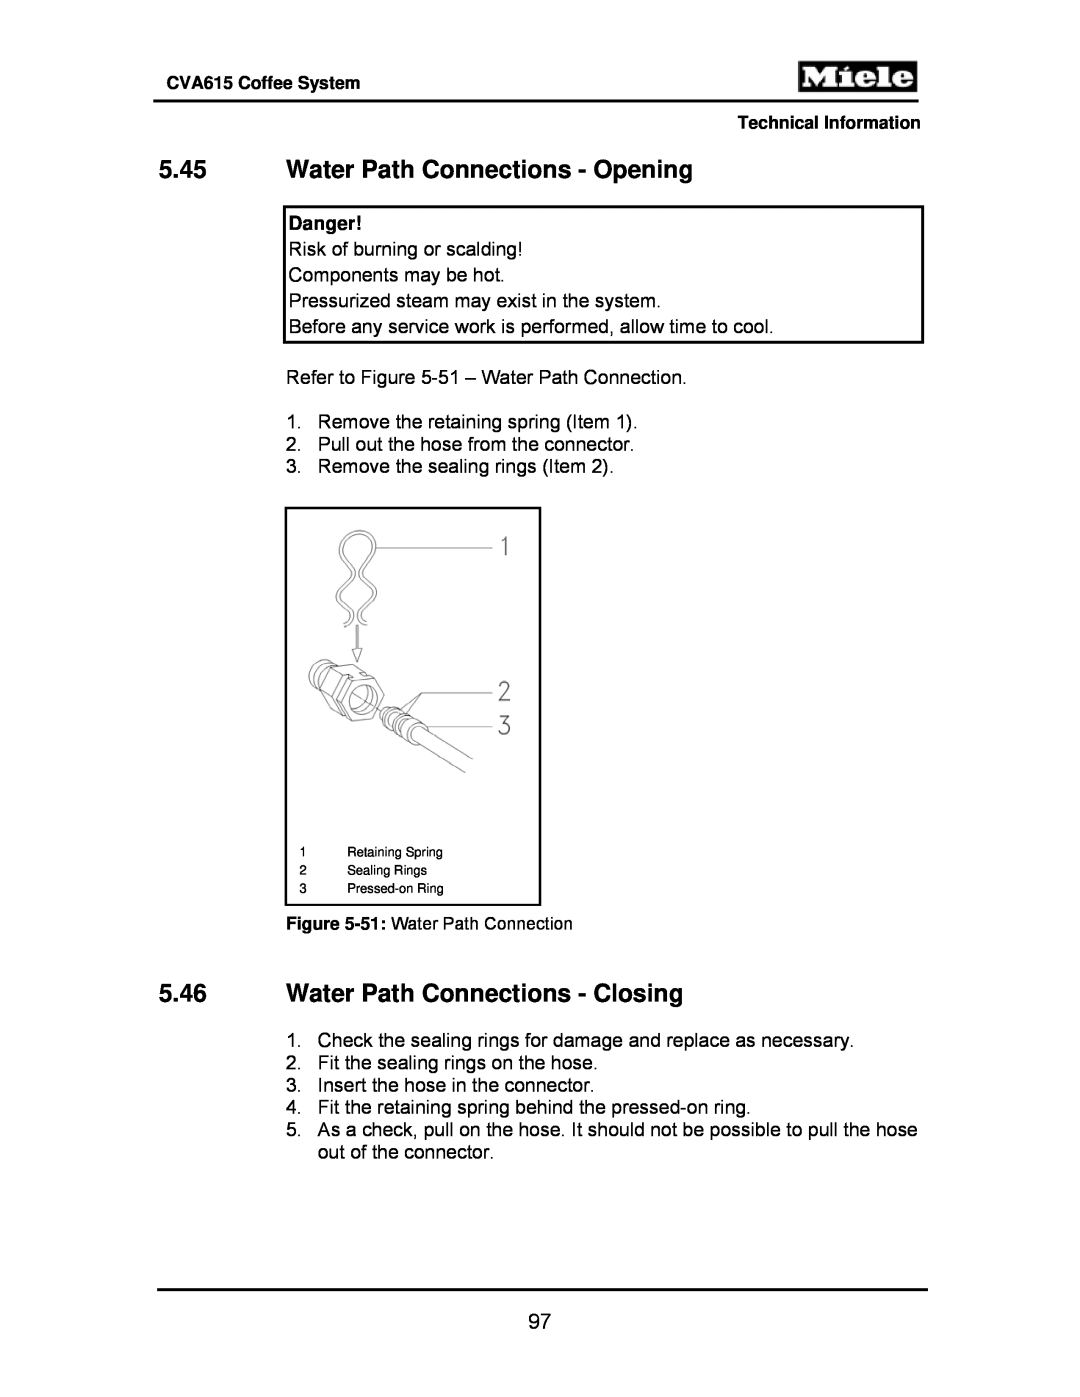 Miele CVA615 manual 5.45Water Path Connections - Opening, 5.46Water Path Connections - Closing 